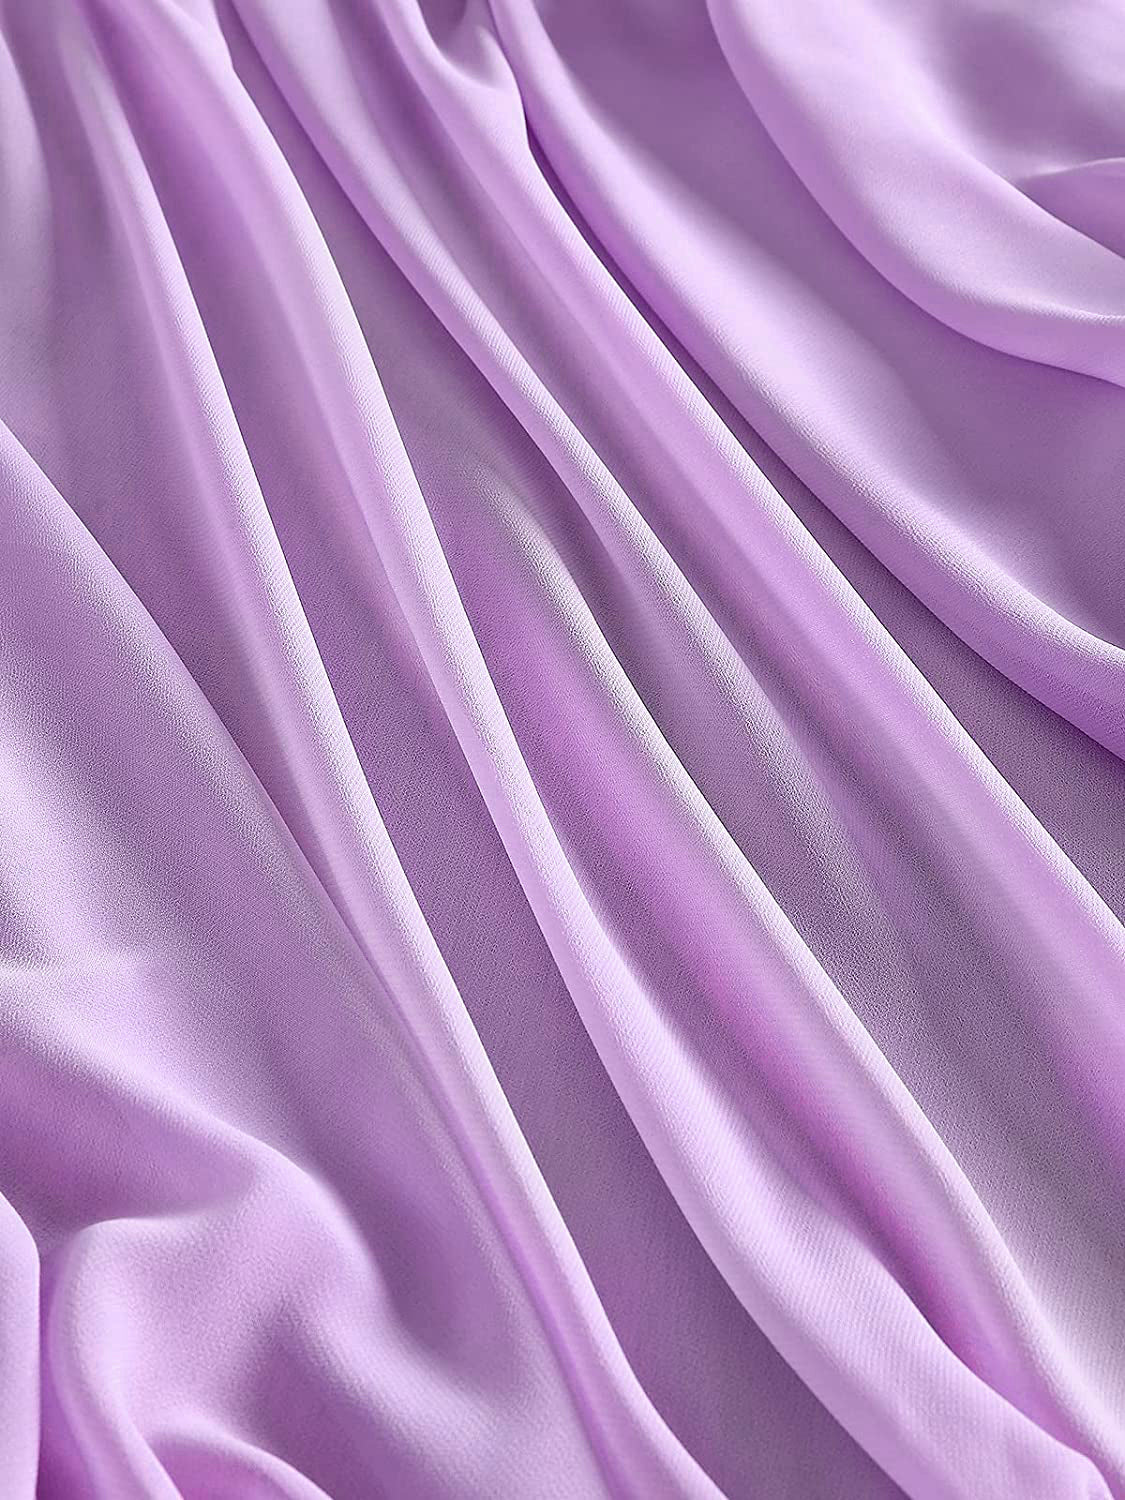 Lavender,files/Lavender-5